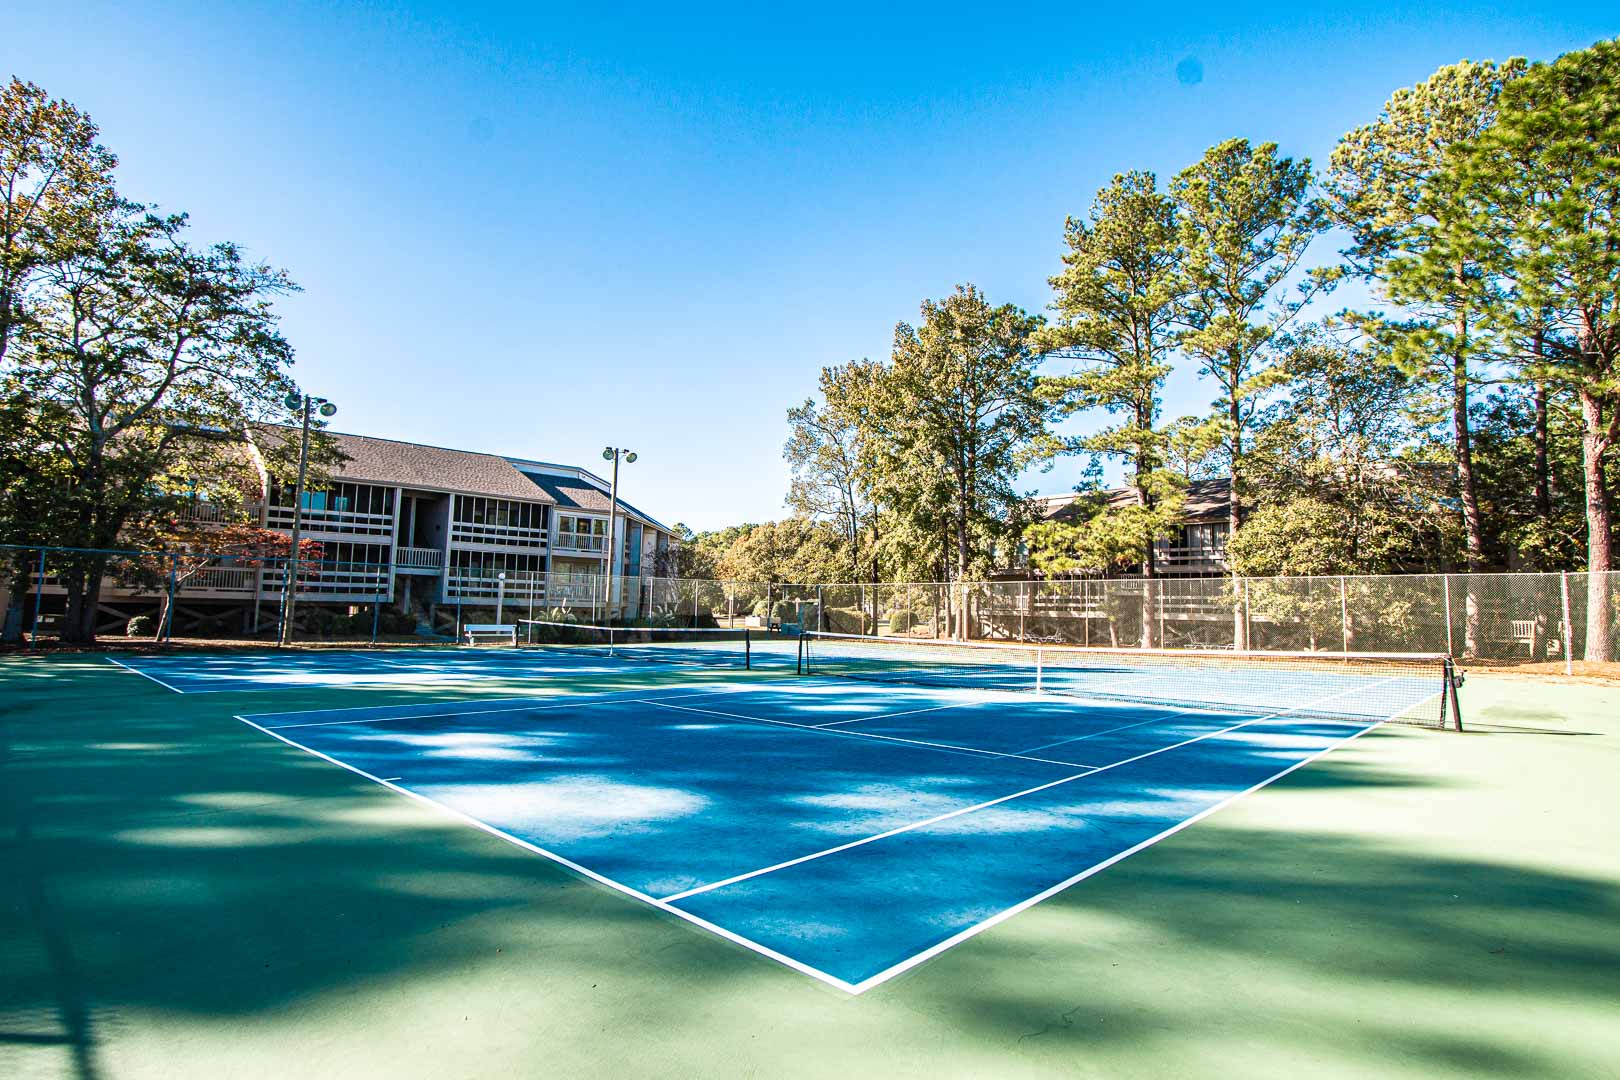 An outdoor tennis court at VRI's Sandcastle Village in New Bern, North Carolina.